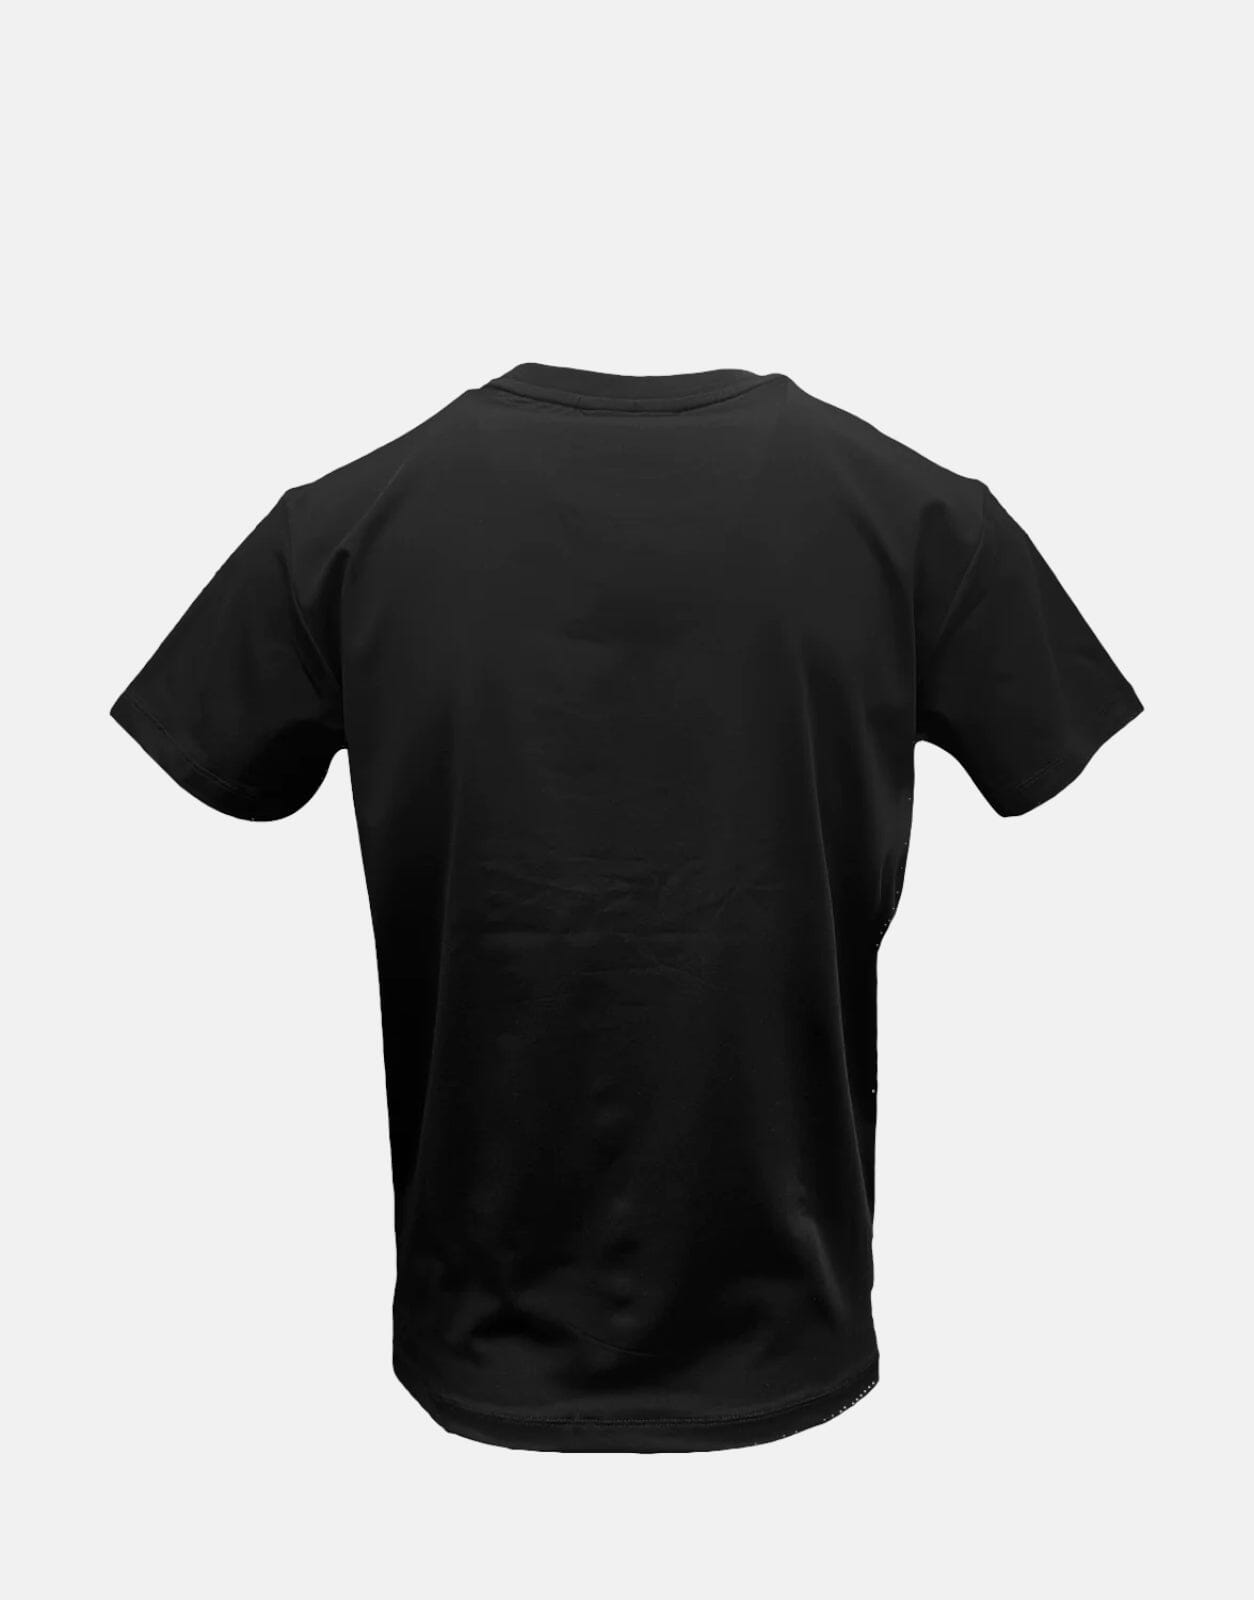 Vialli Fatih Black T-Shirt - Subwear